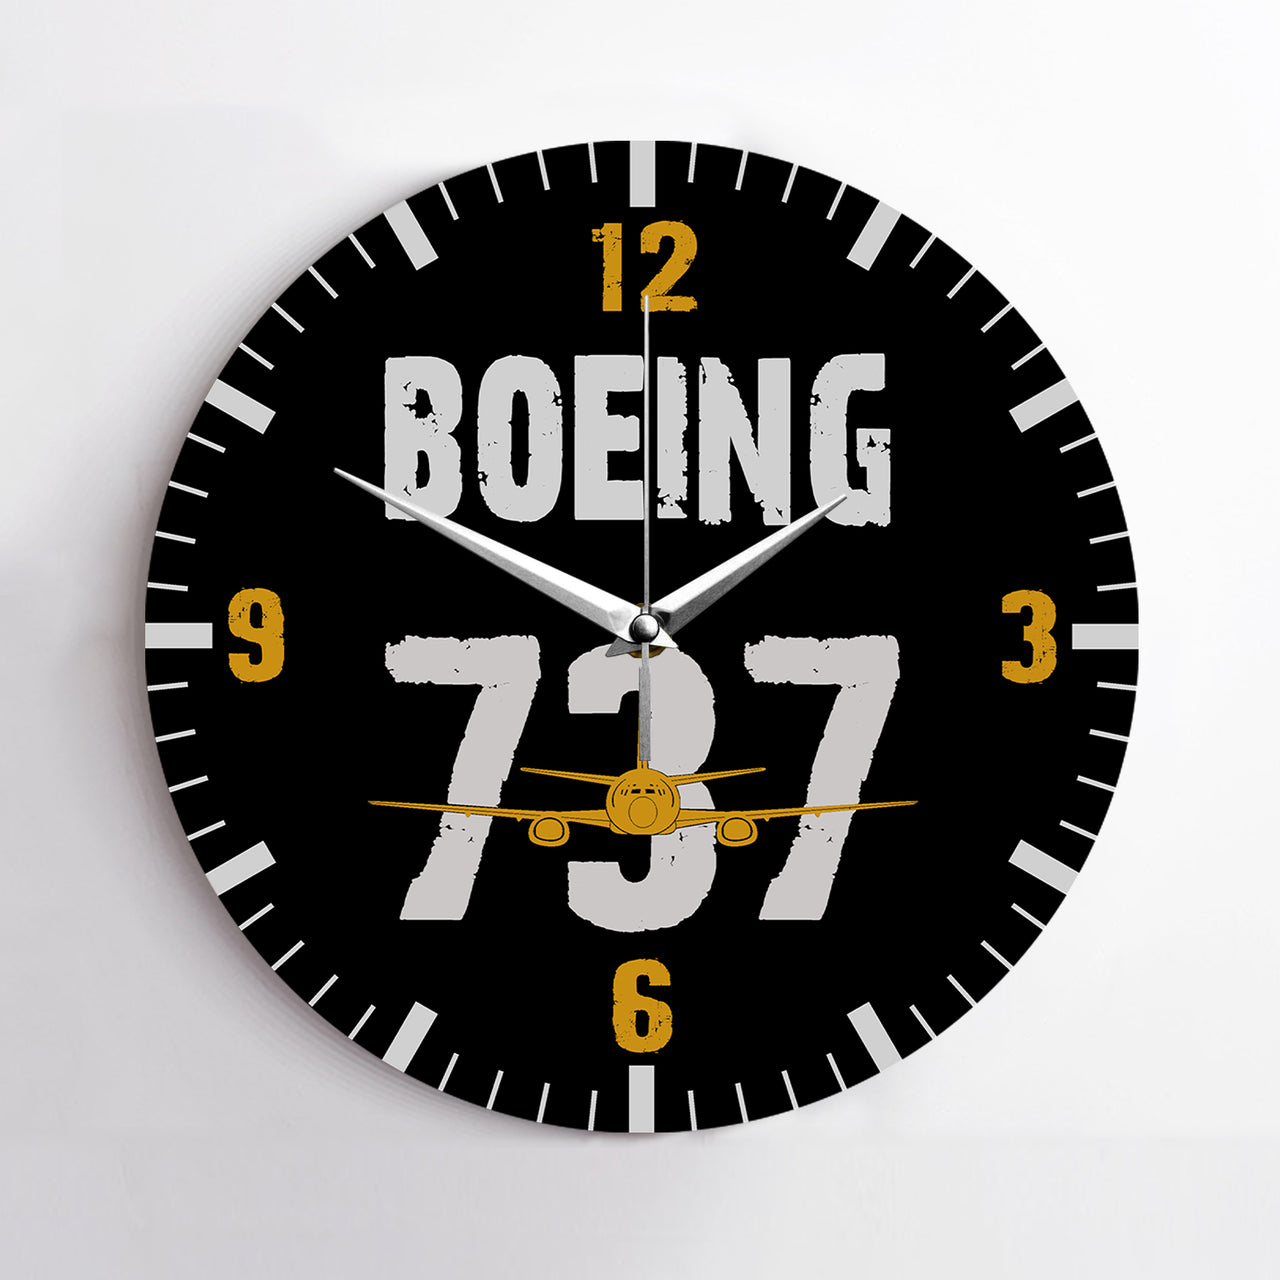 Boeing 737 Designed Wall Clocks